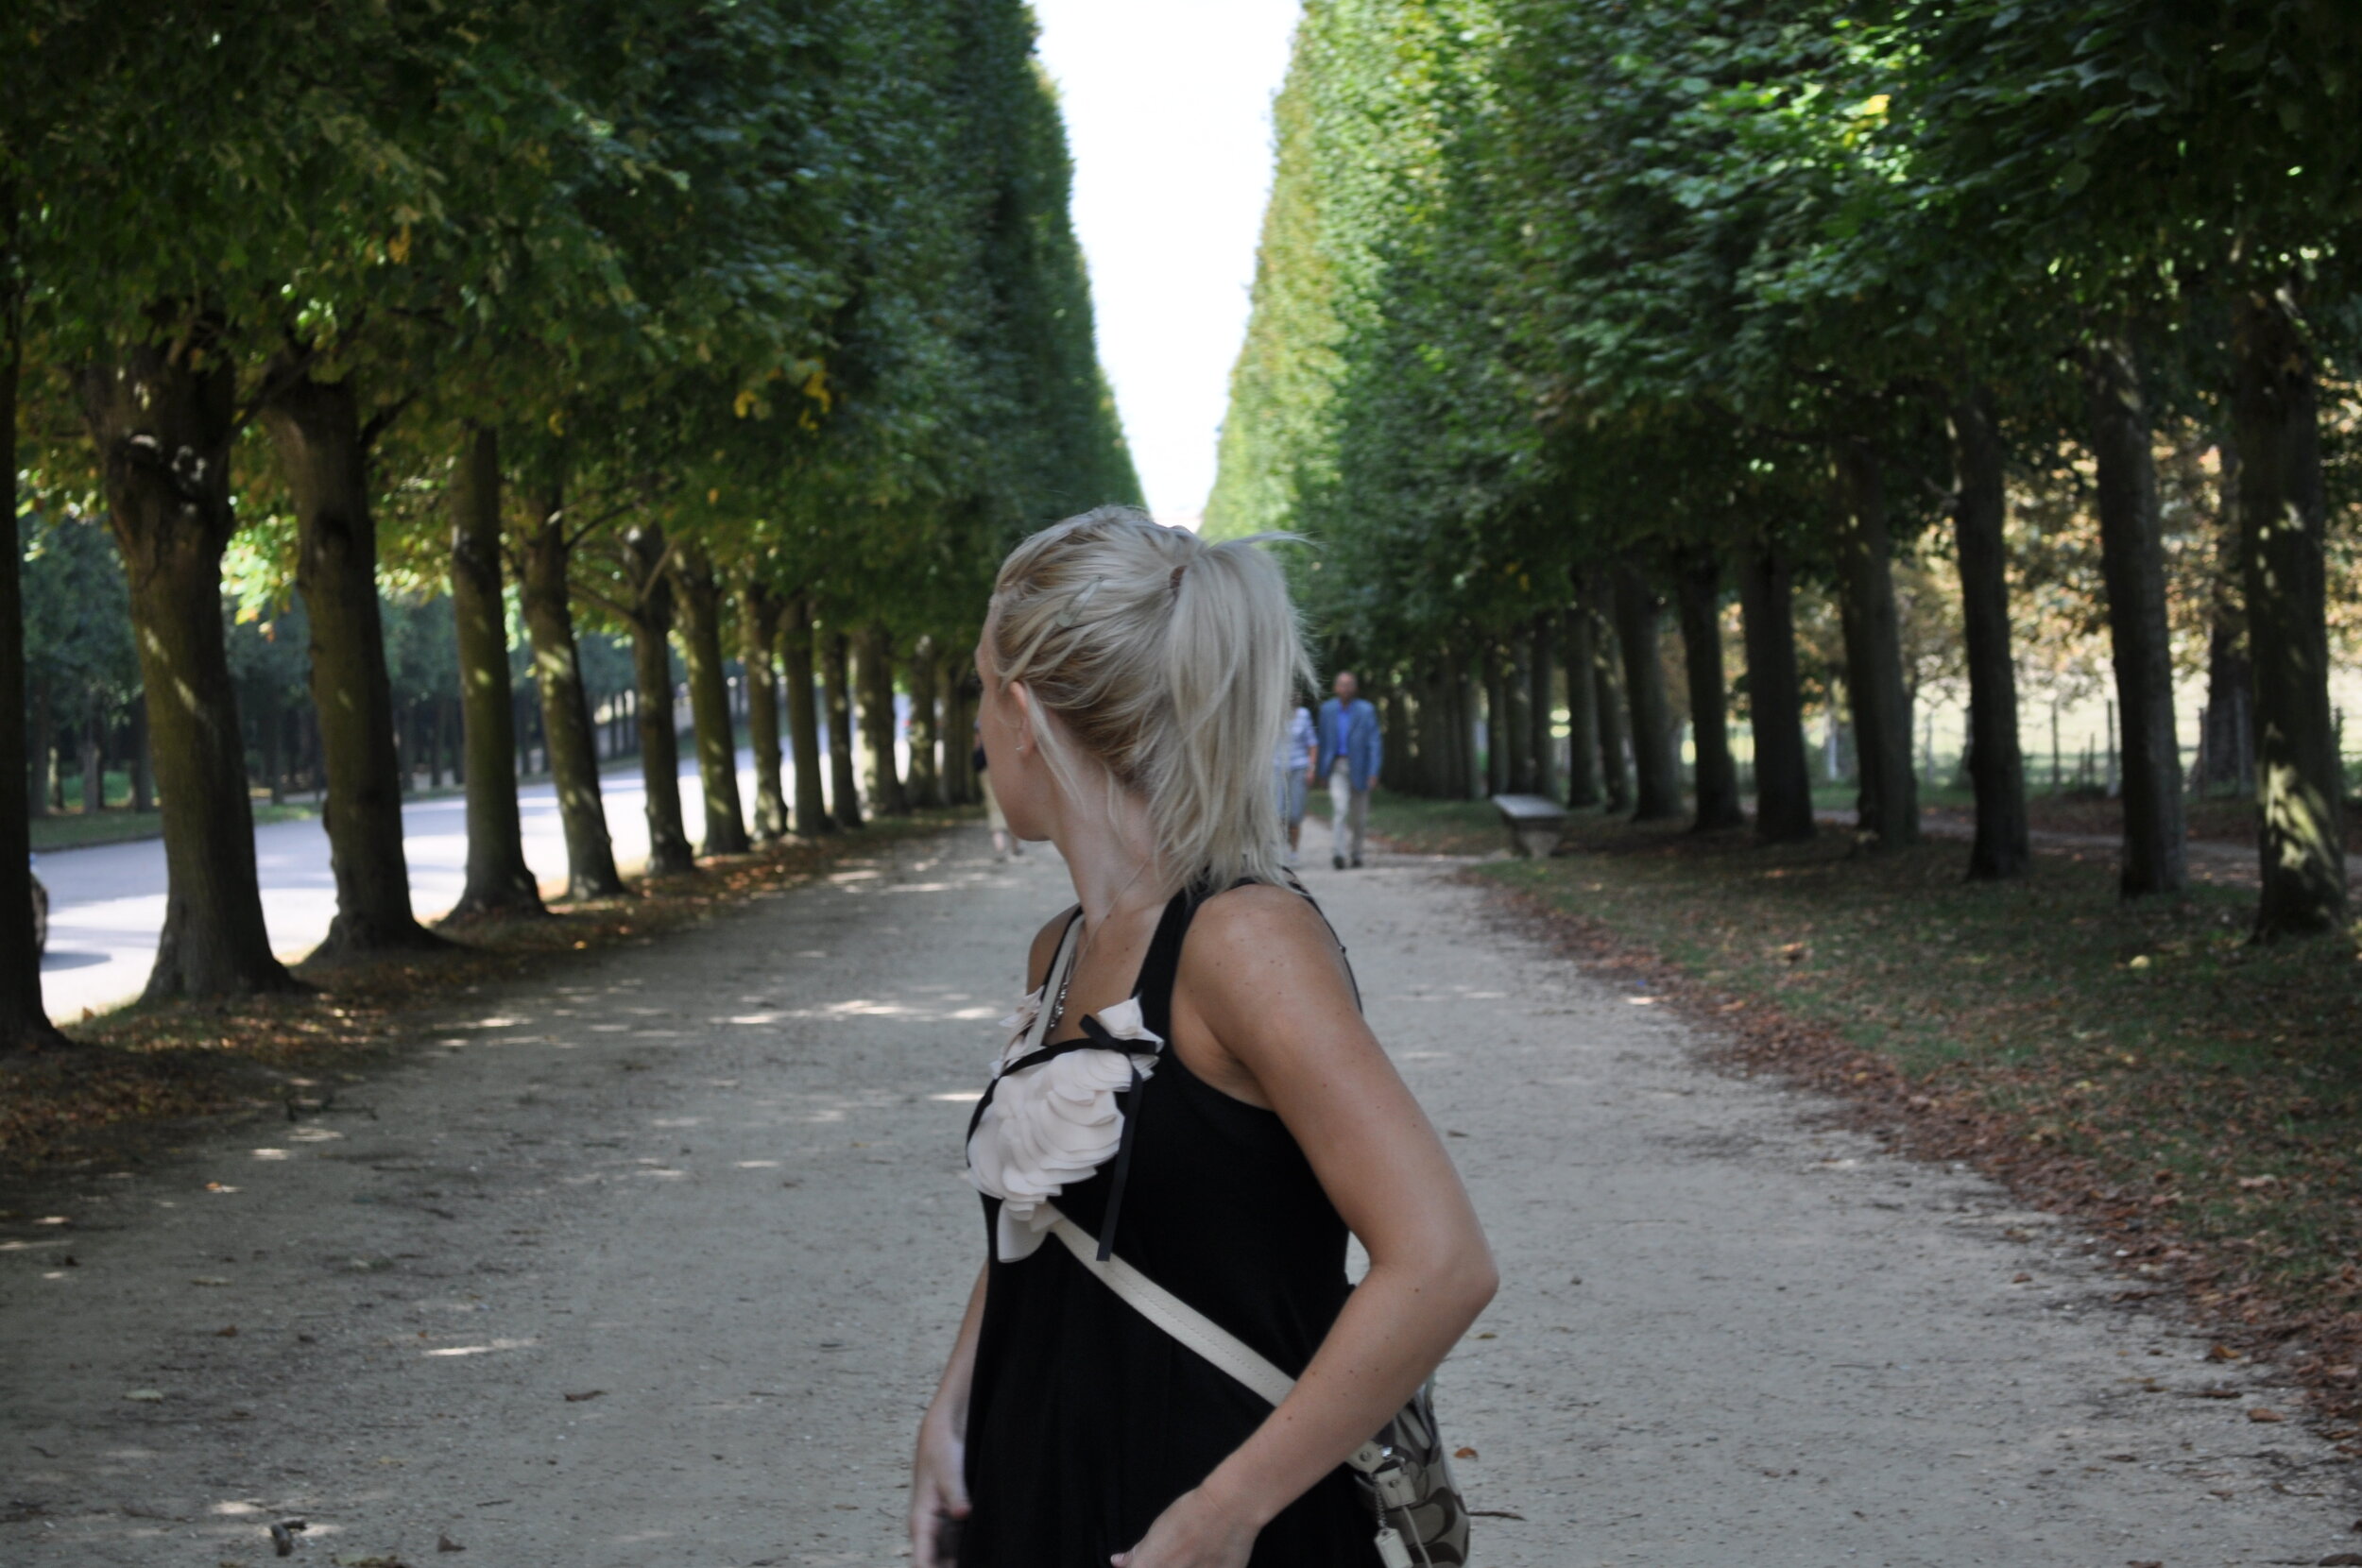 Stunning allées of trees at Versailles